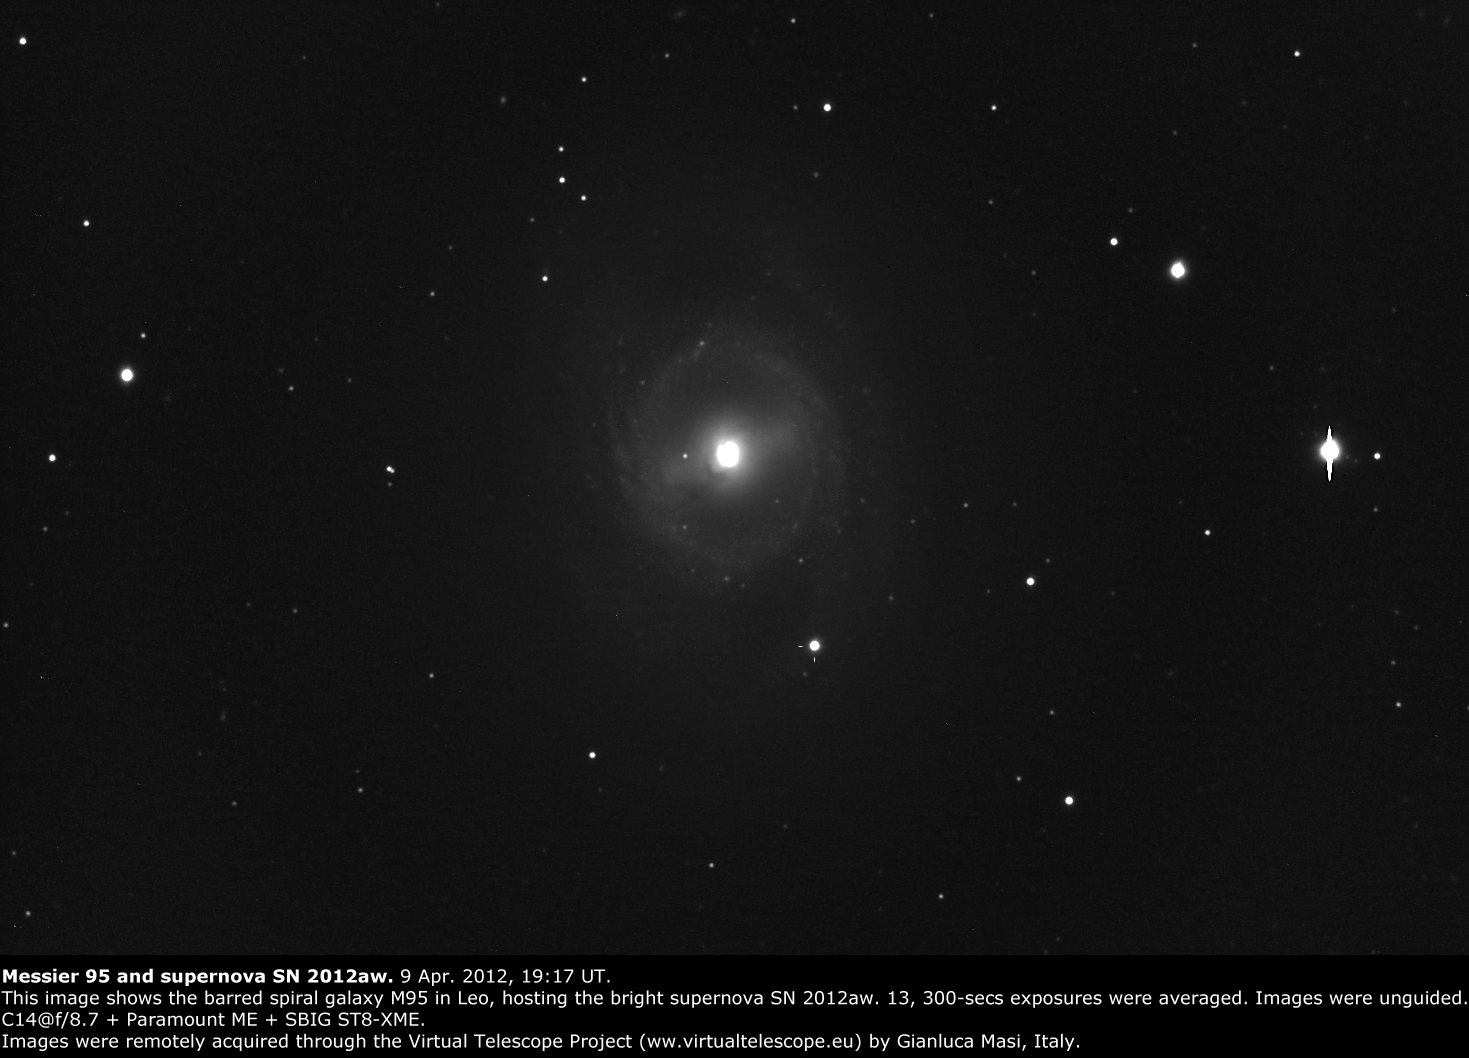 Eastex Astronomy: Supernova in Messier 95